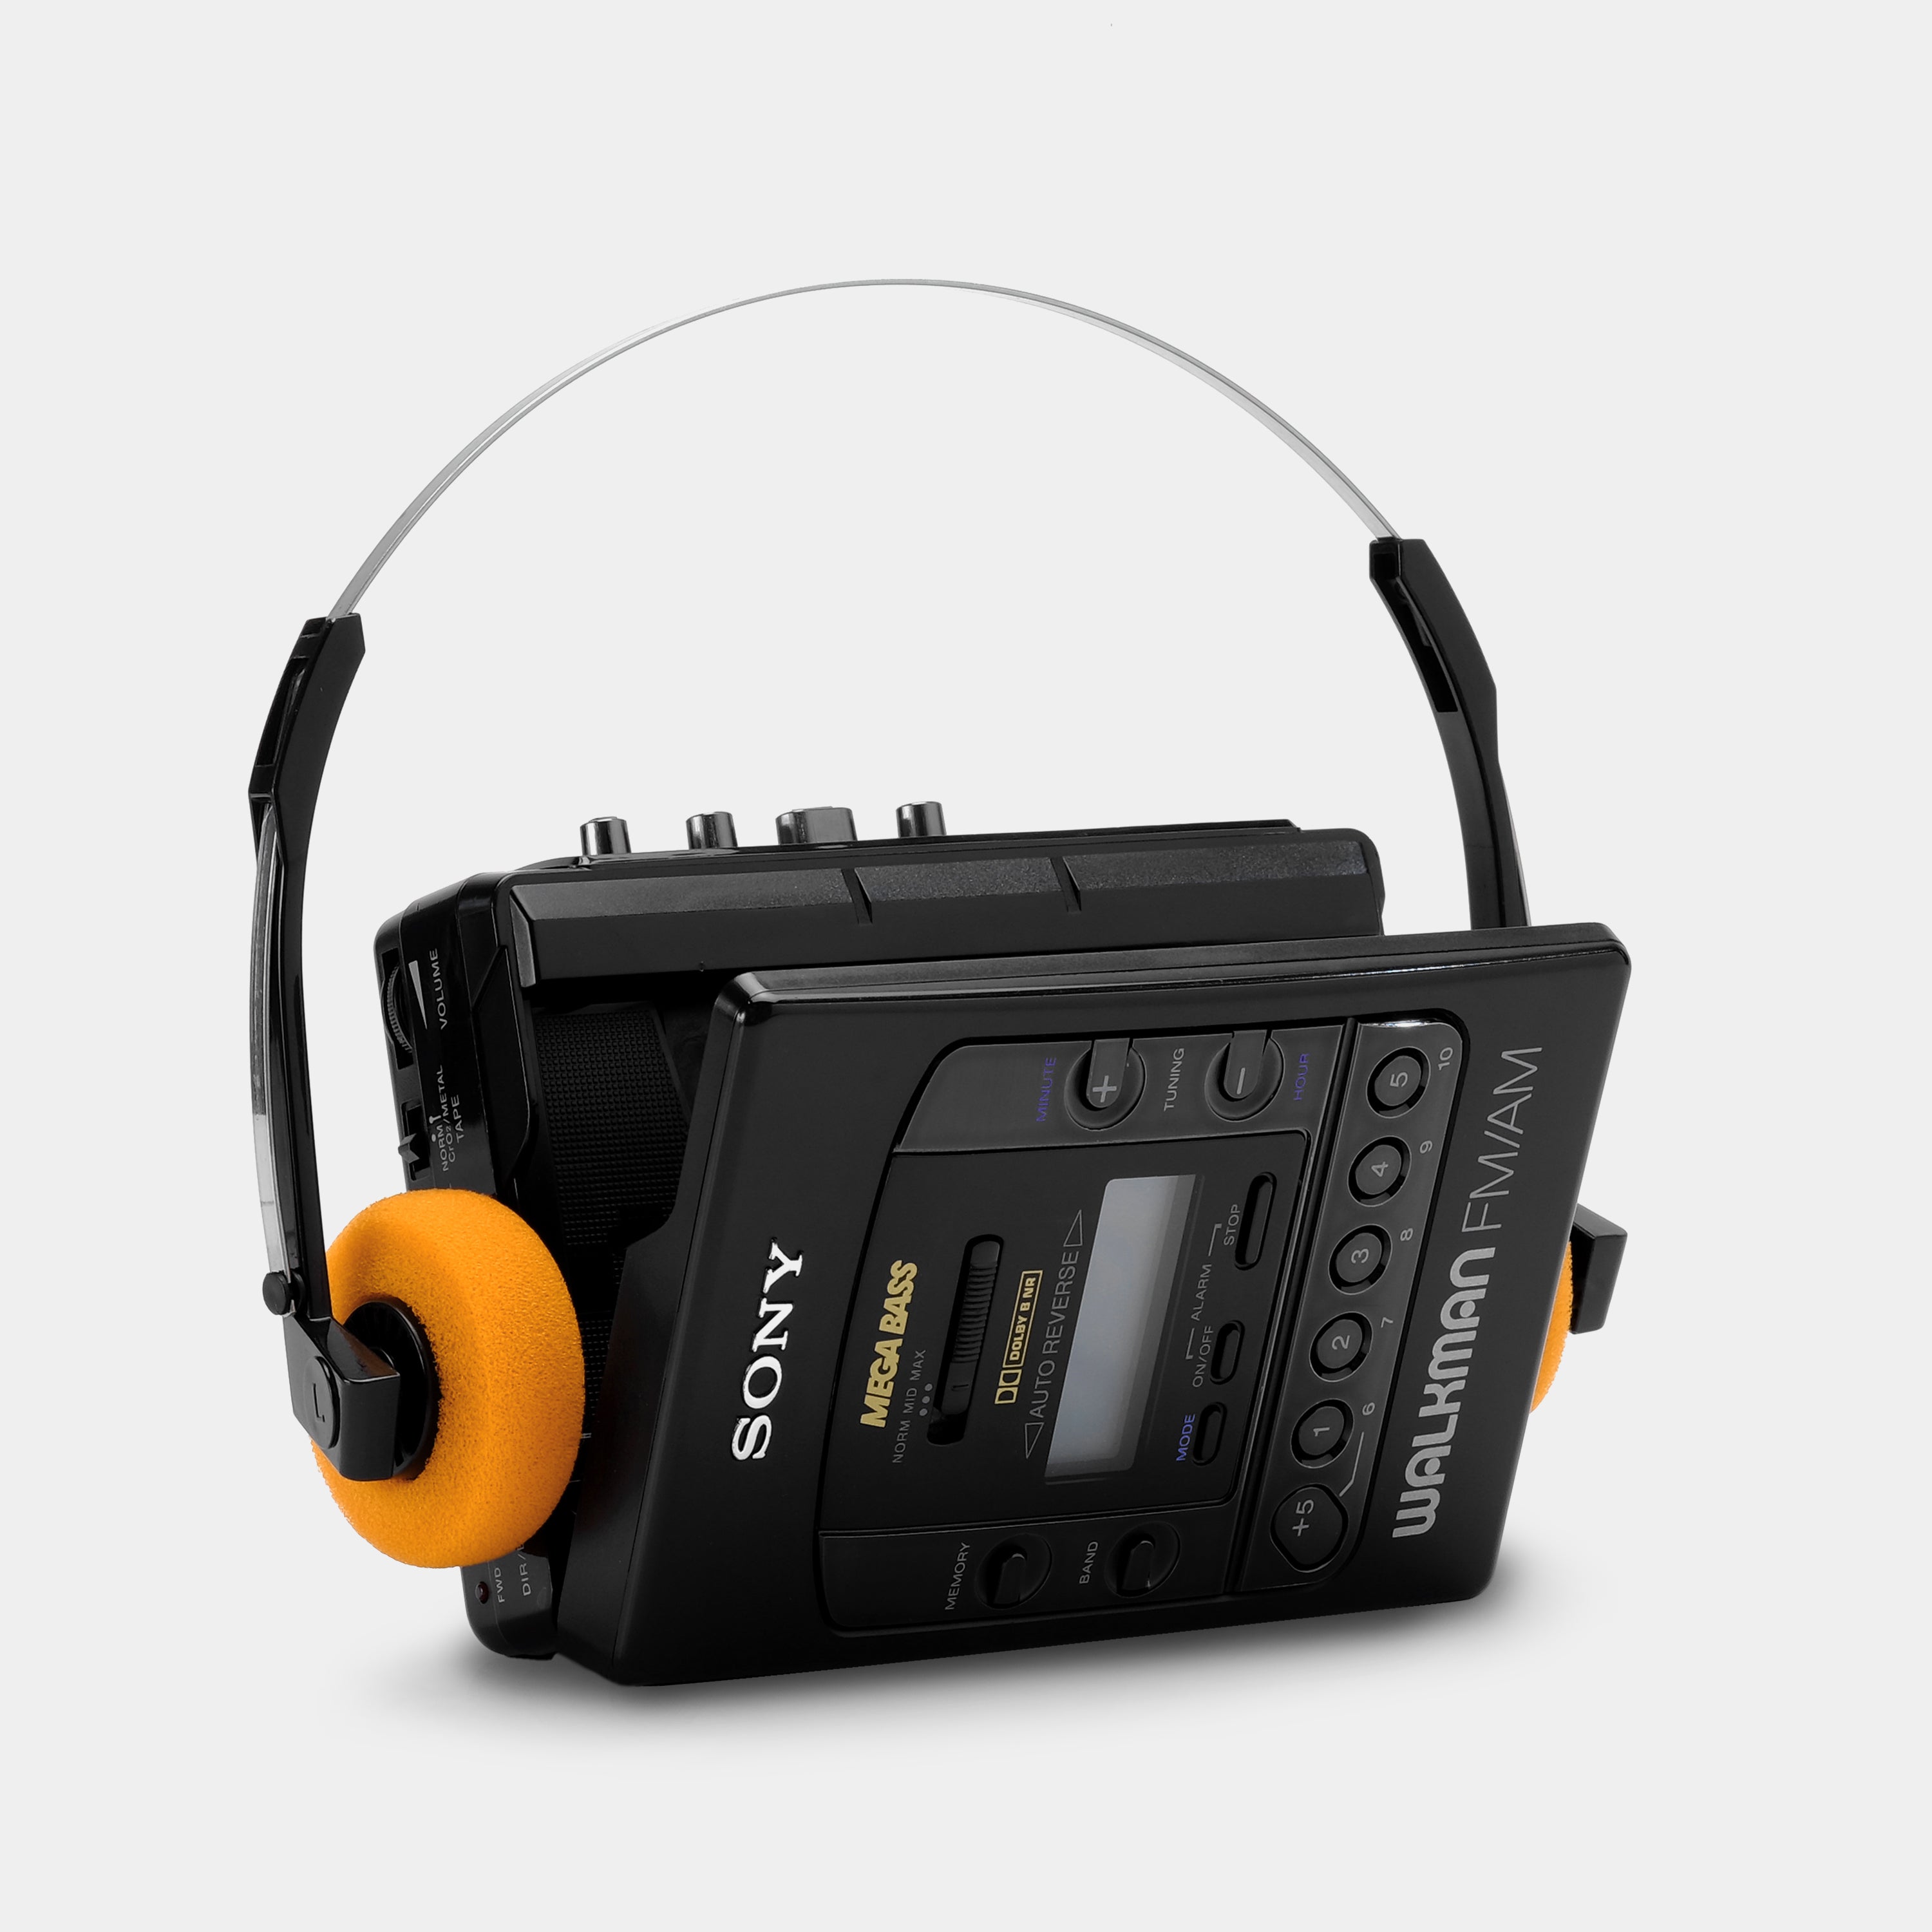 Sony Walkman WM-F2085 Auto Reverse Portable Cassette Player